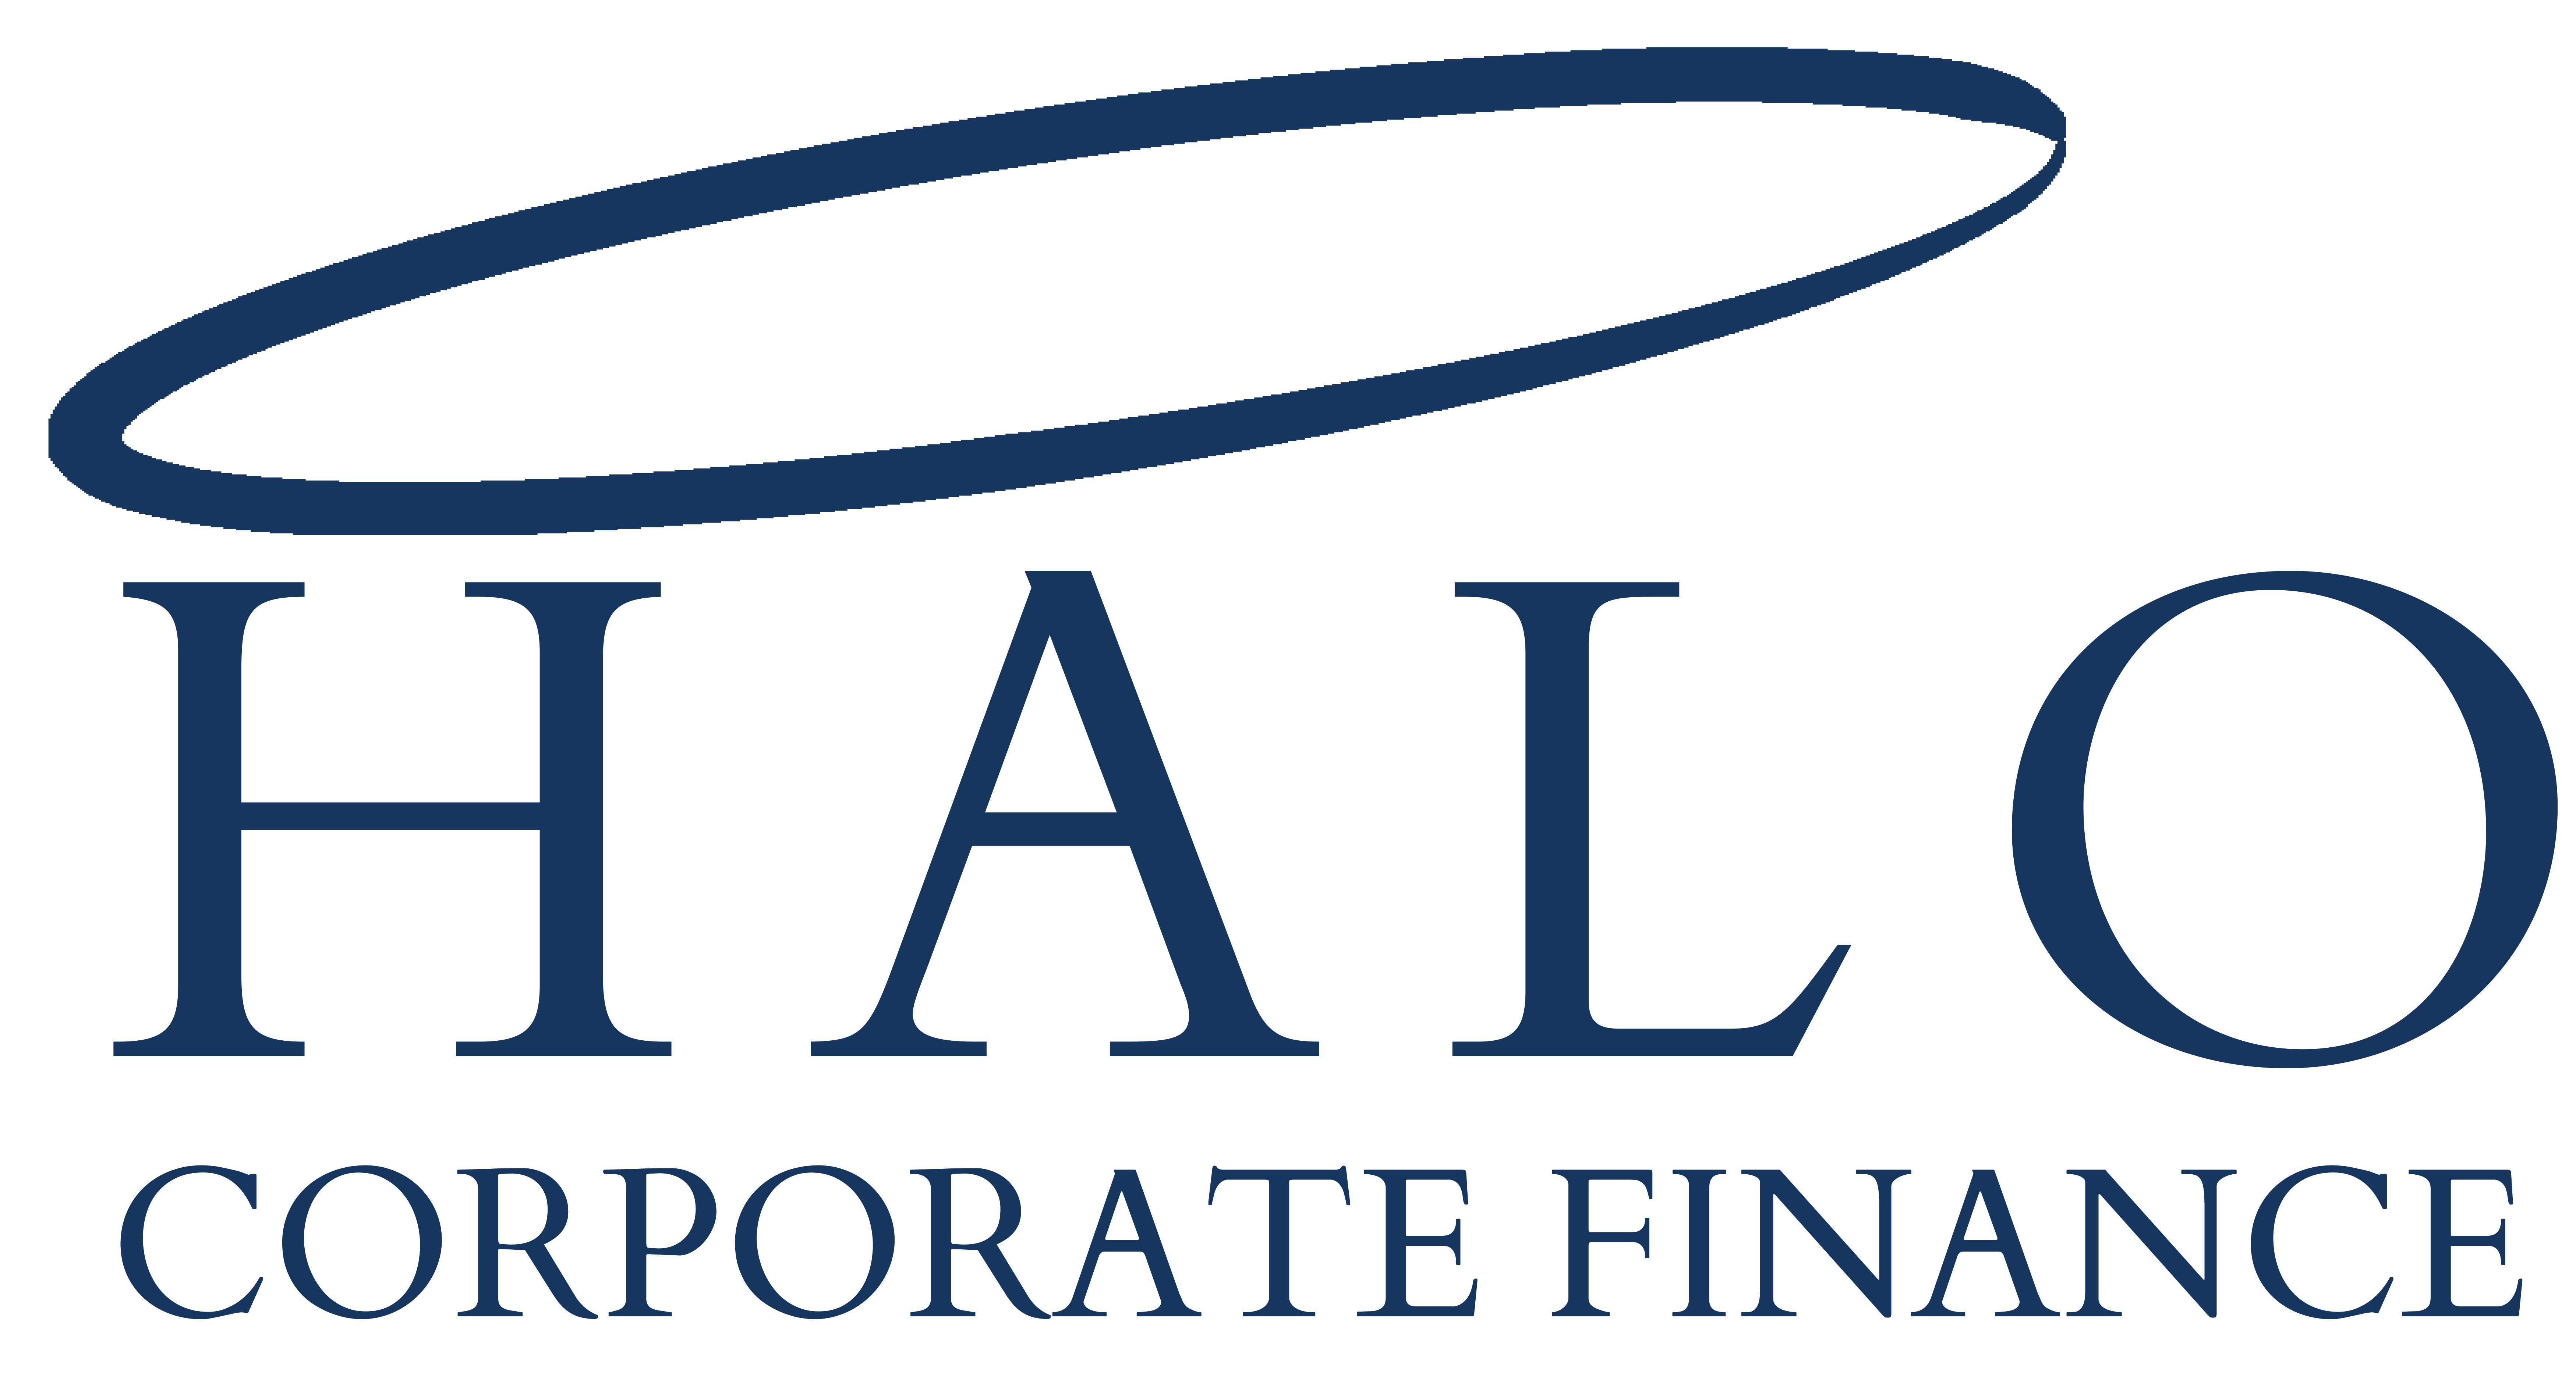 Halo Corporate Finance Ltd